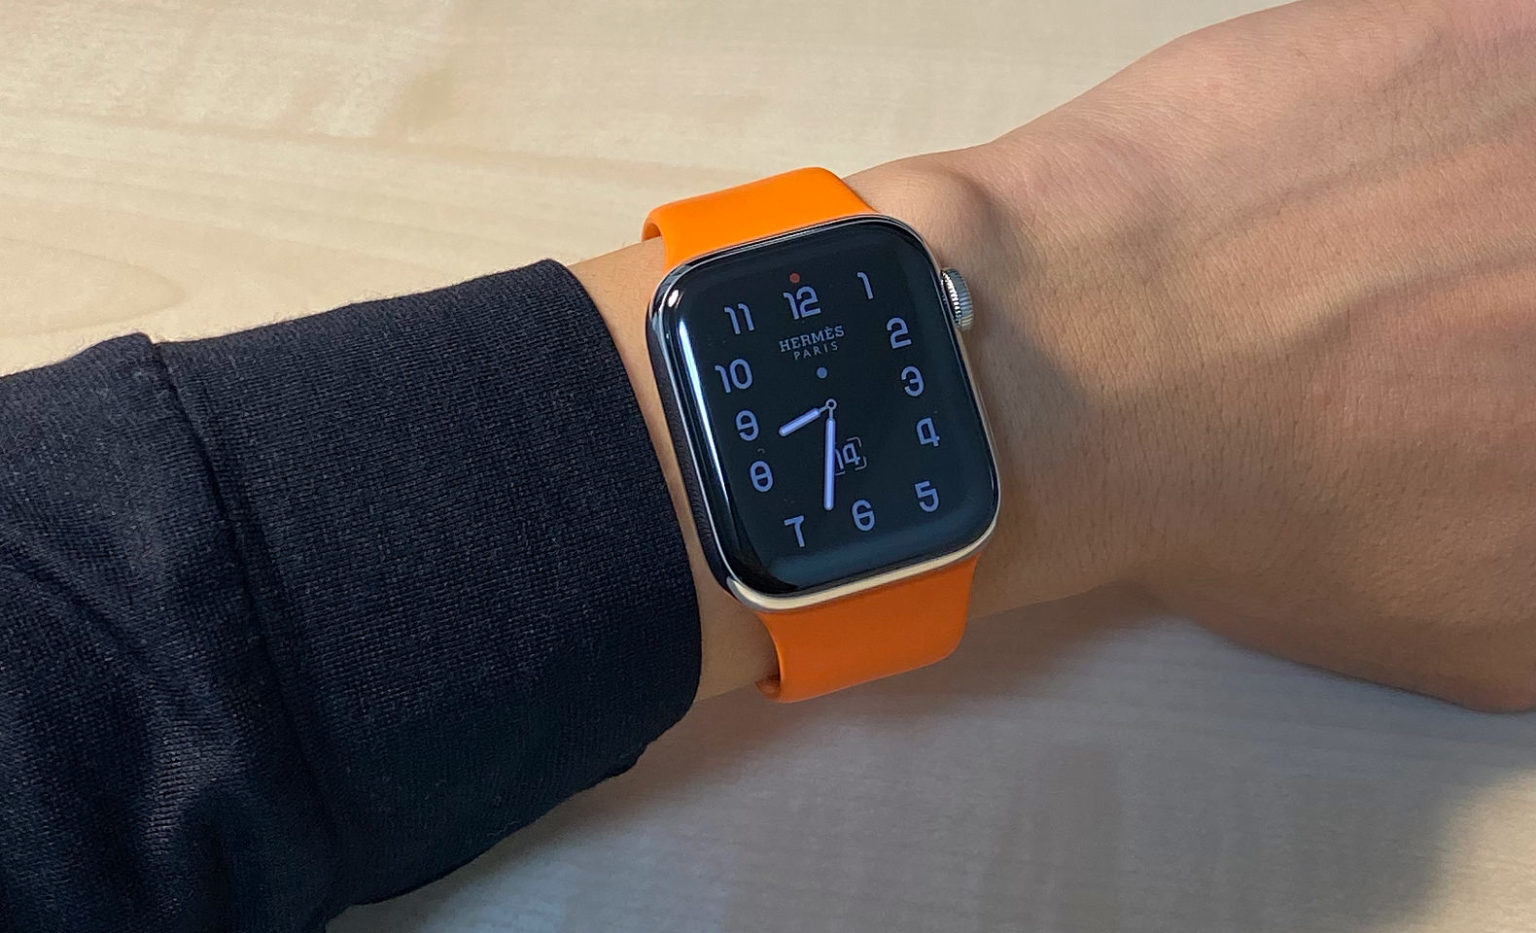 Apple Watch Hermèsには「Hermèsオレンジスポーツバンド」が付属するのでありがたい